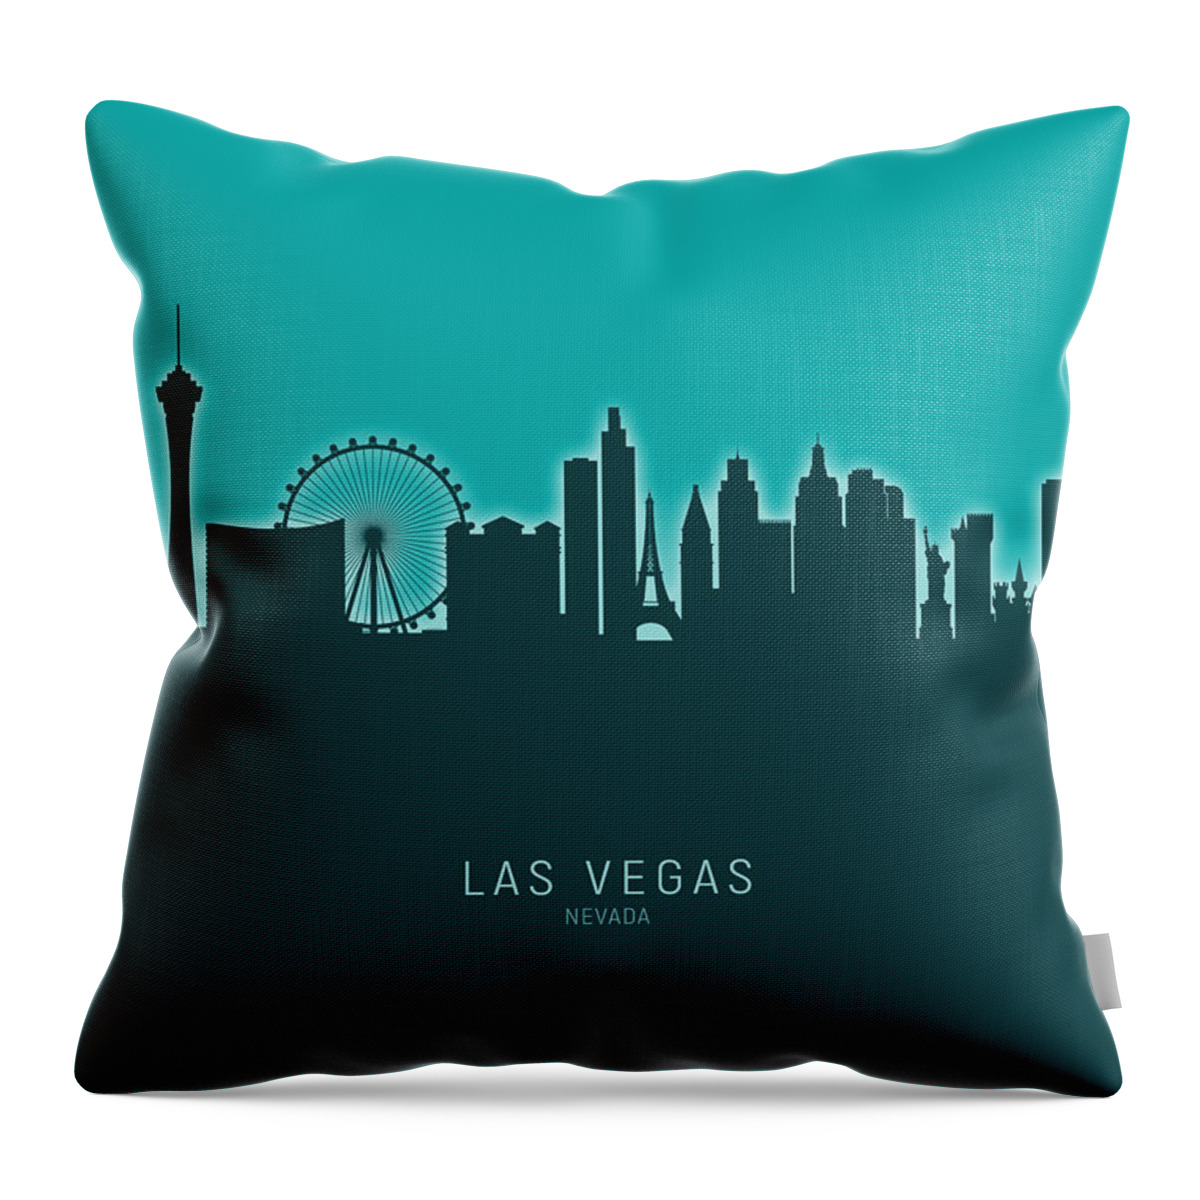 Las Vegas Throw Pillow featuring the digital art Las Vegas Nevada Skyline #48 by Michael Tompsett